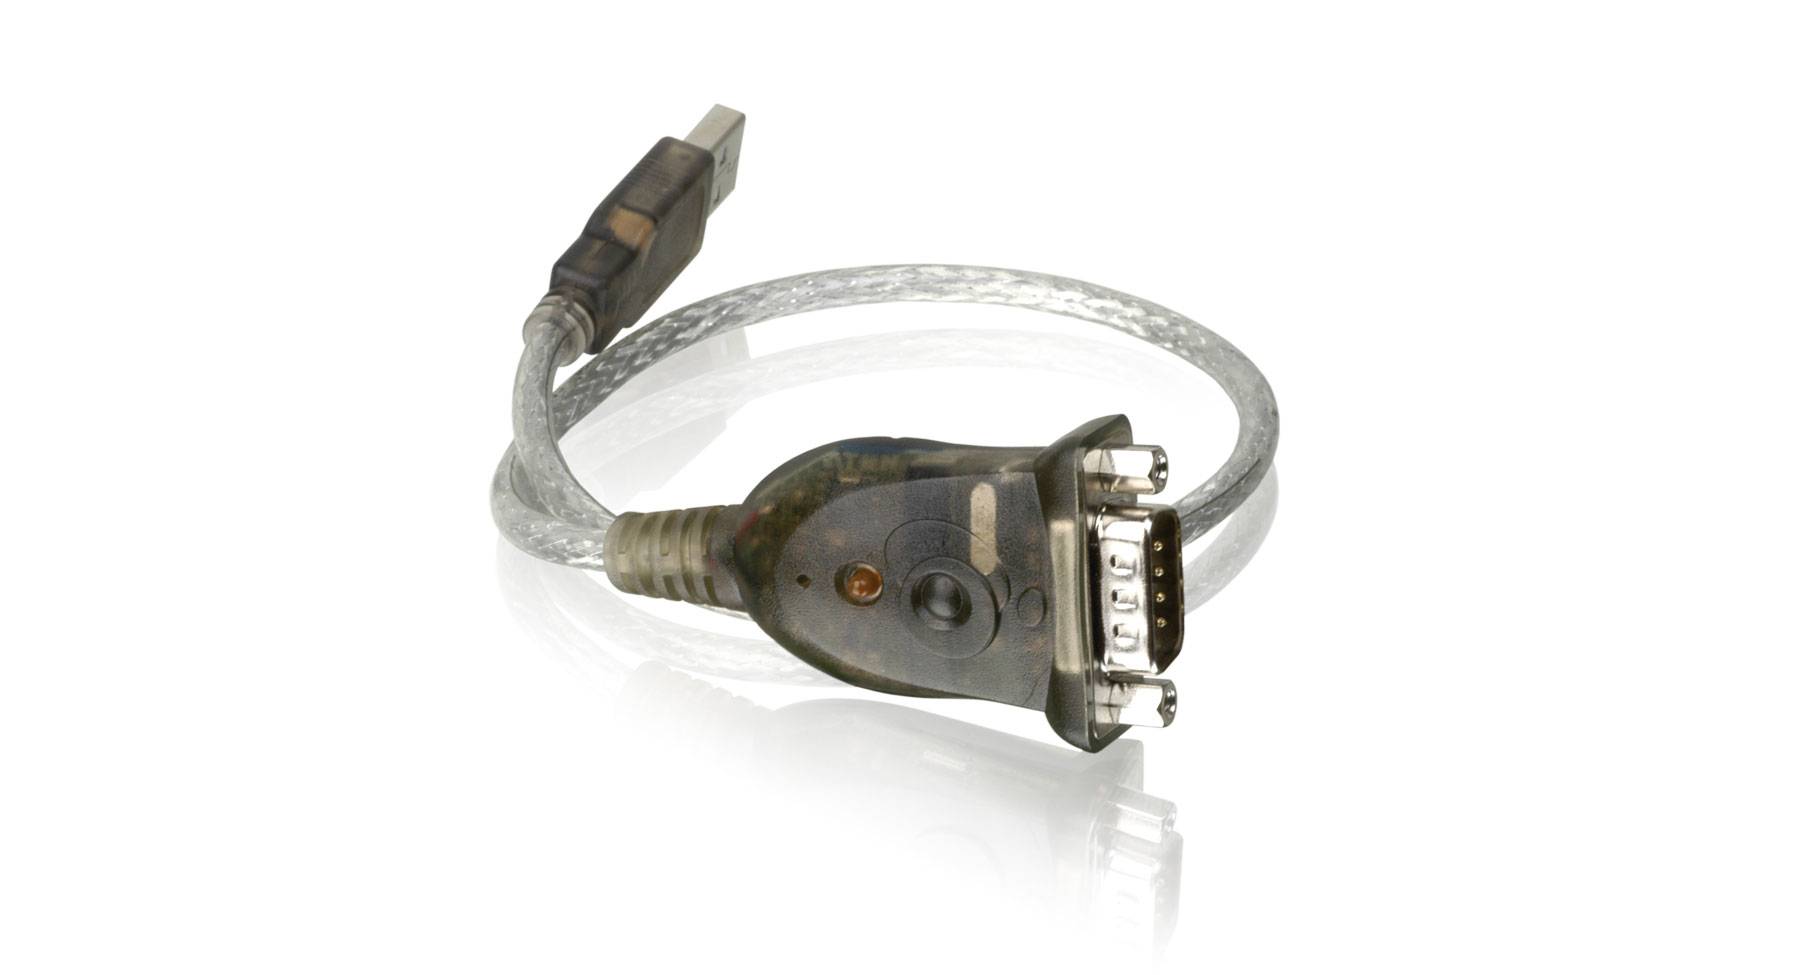 IOGEAR GUC232A - USB to Serial